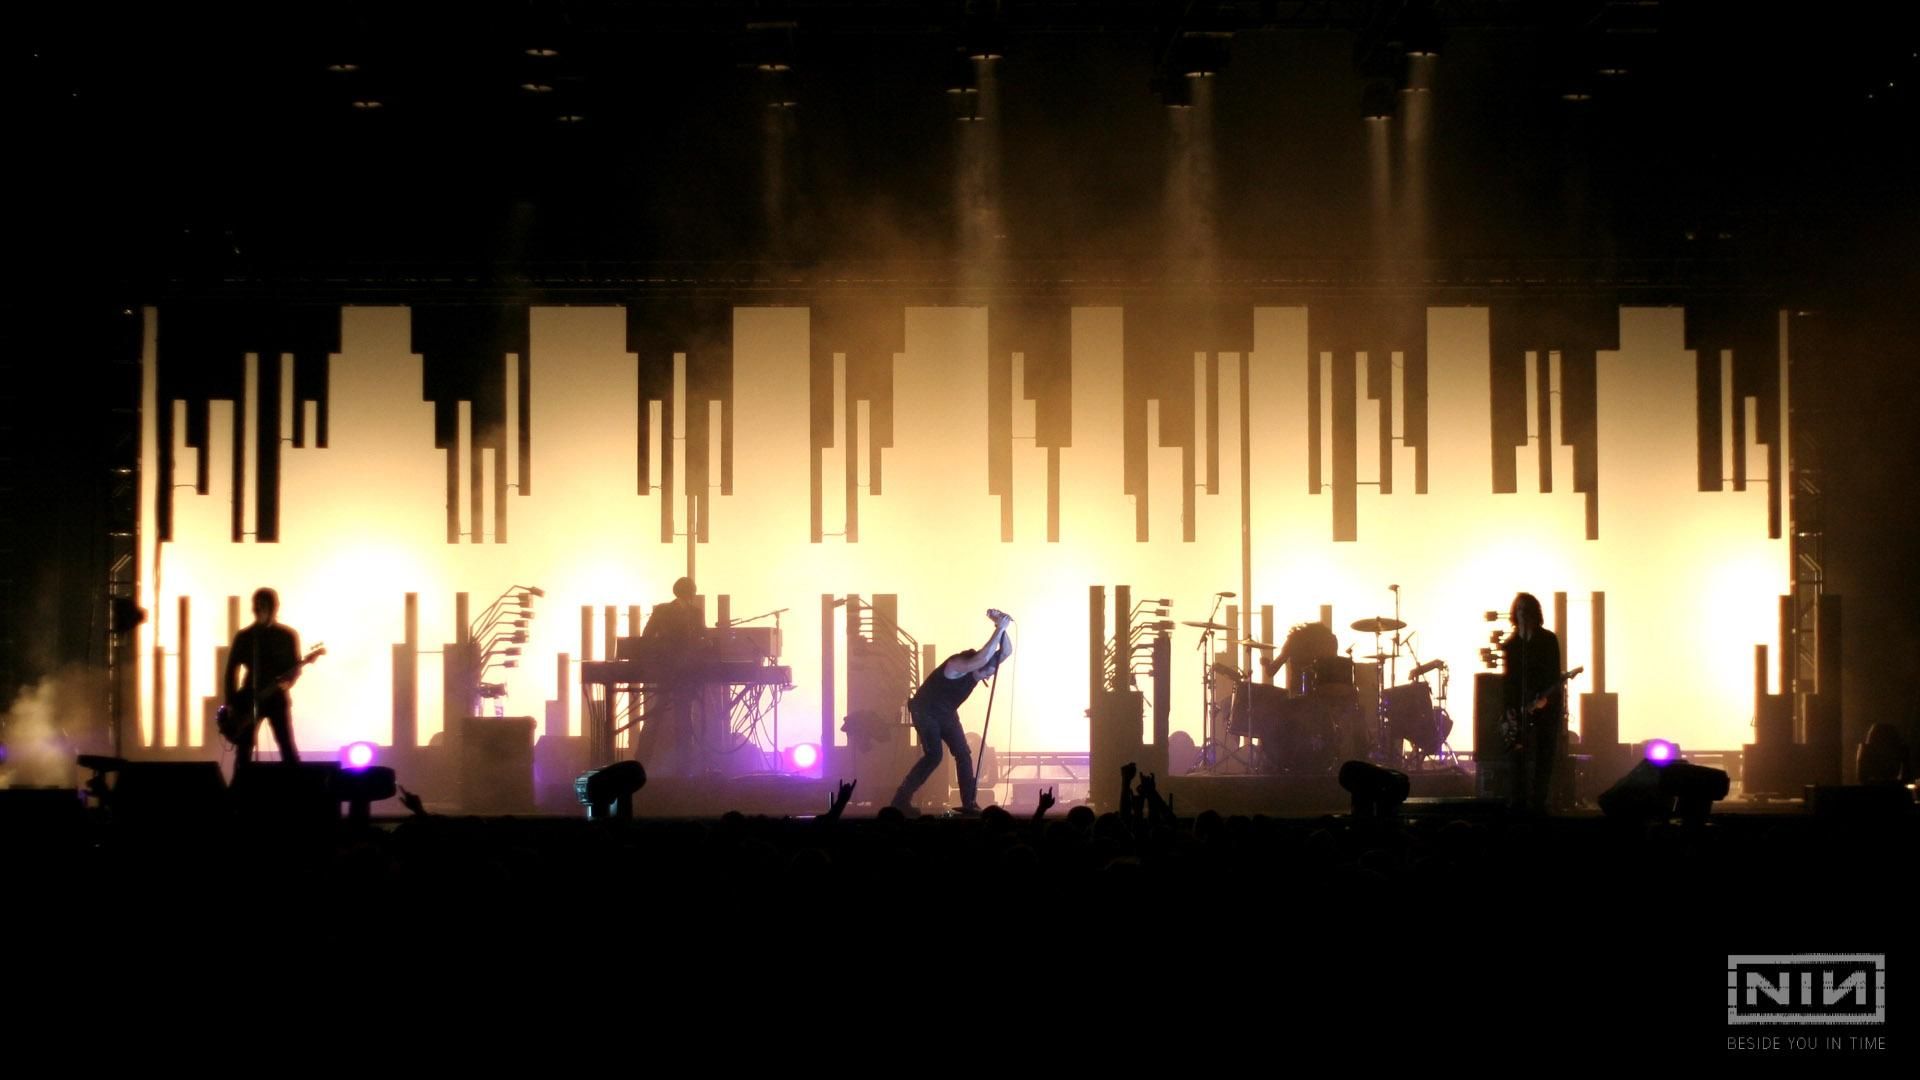 Download Concert Stage Wallpaper, HD Background Download